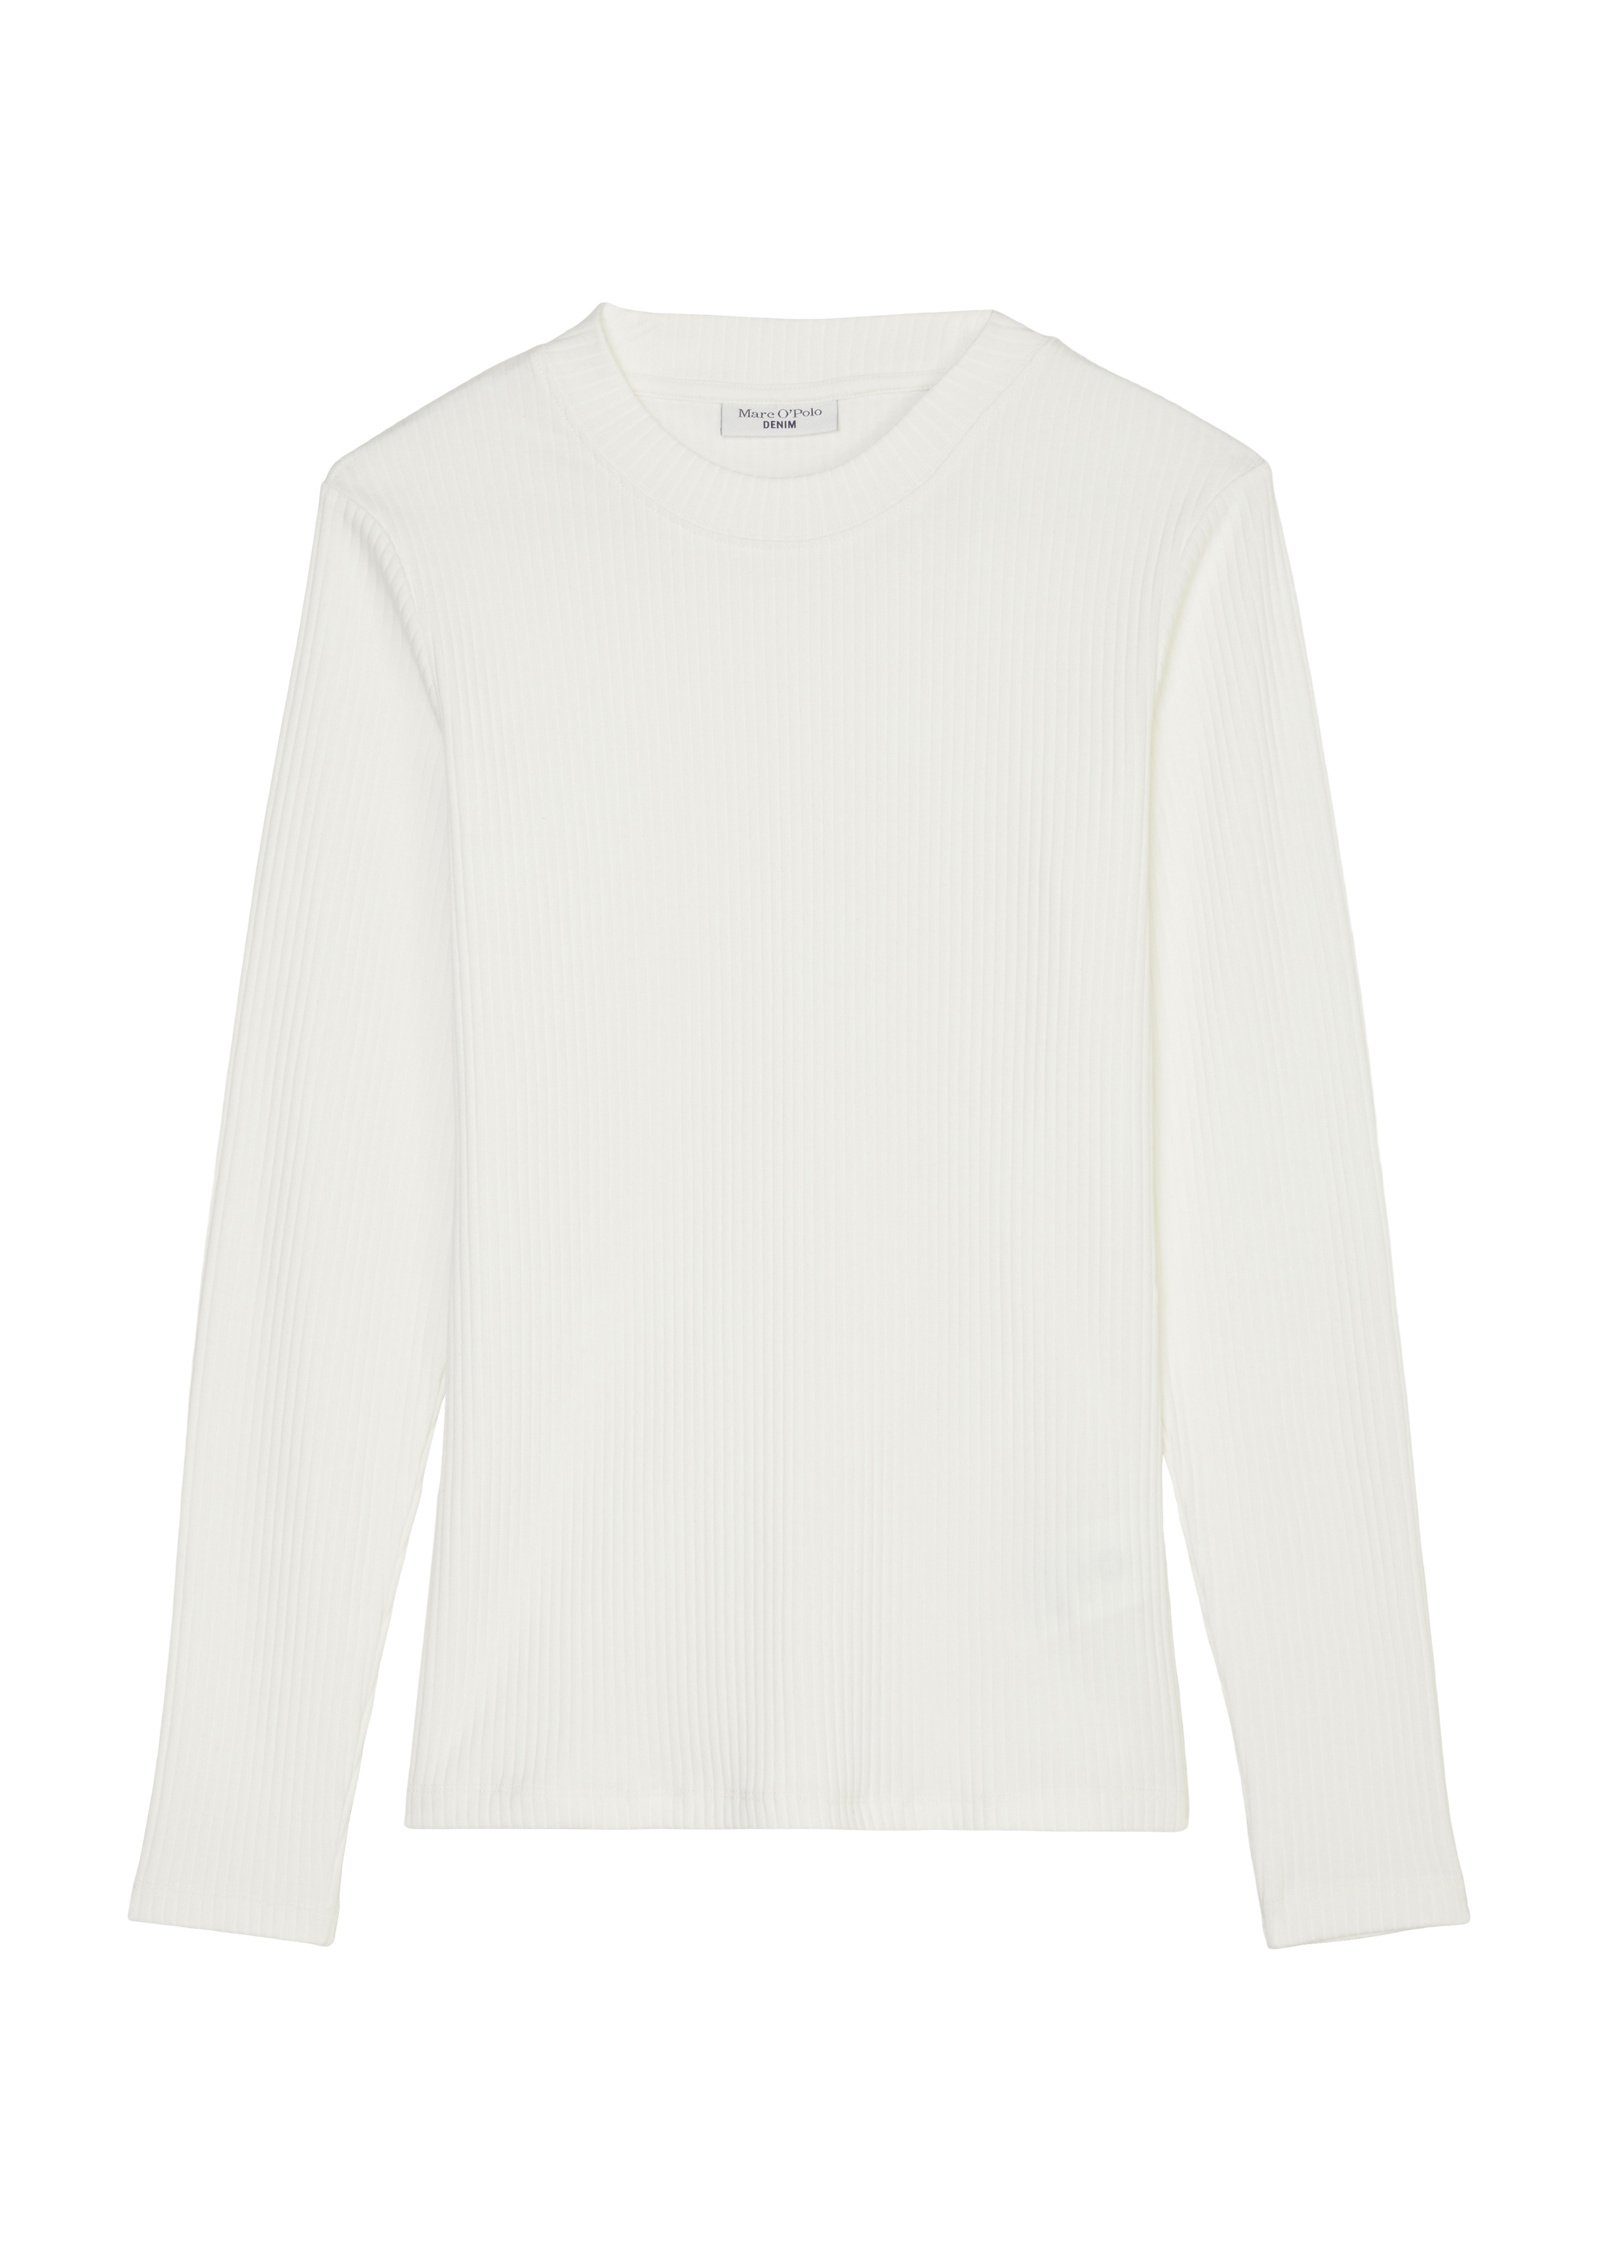 Marc O'Polo DENIM Langarmshirt aus weiß Cotton-Jersey Organic